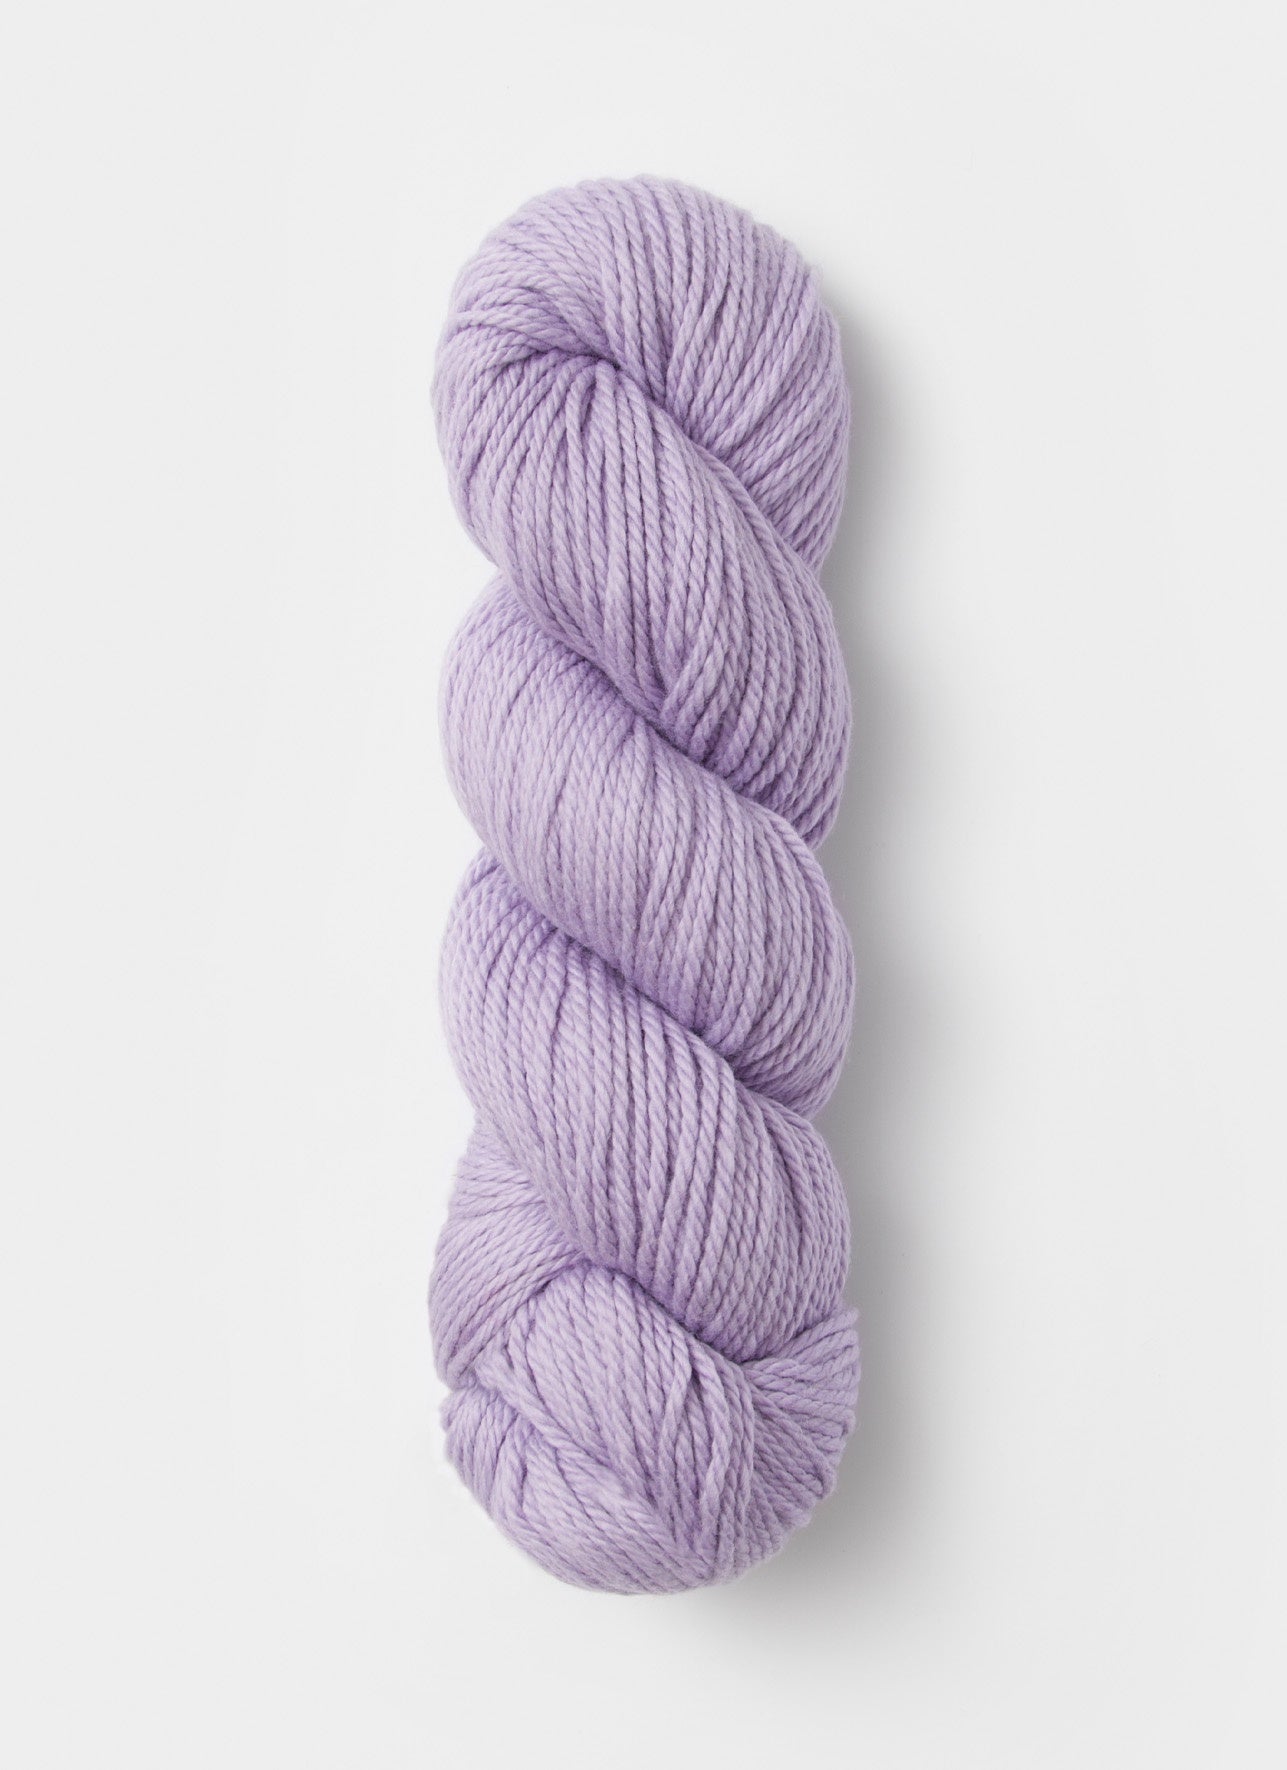 211 Baby Tunic Kit, Size 1-3 (Lilac 7523)